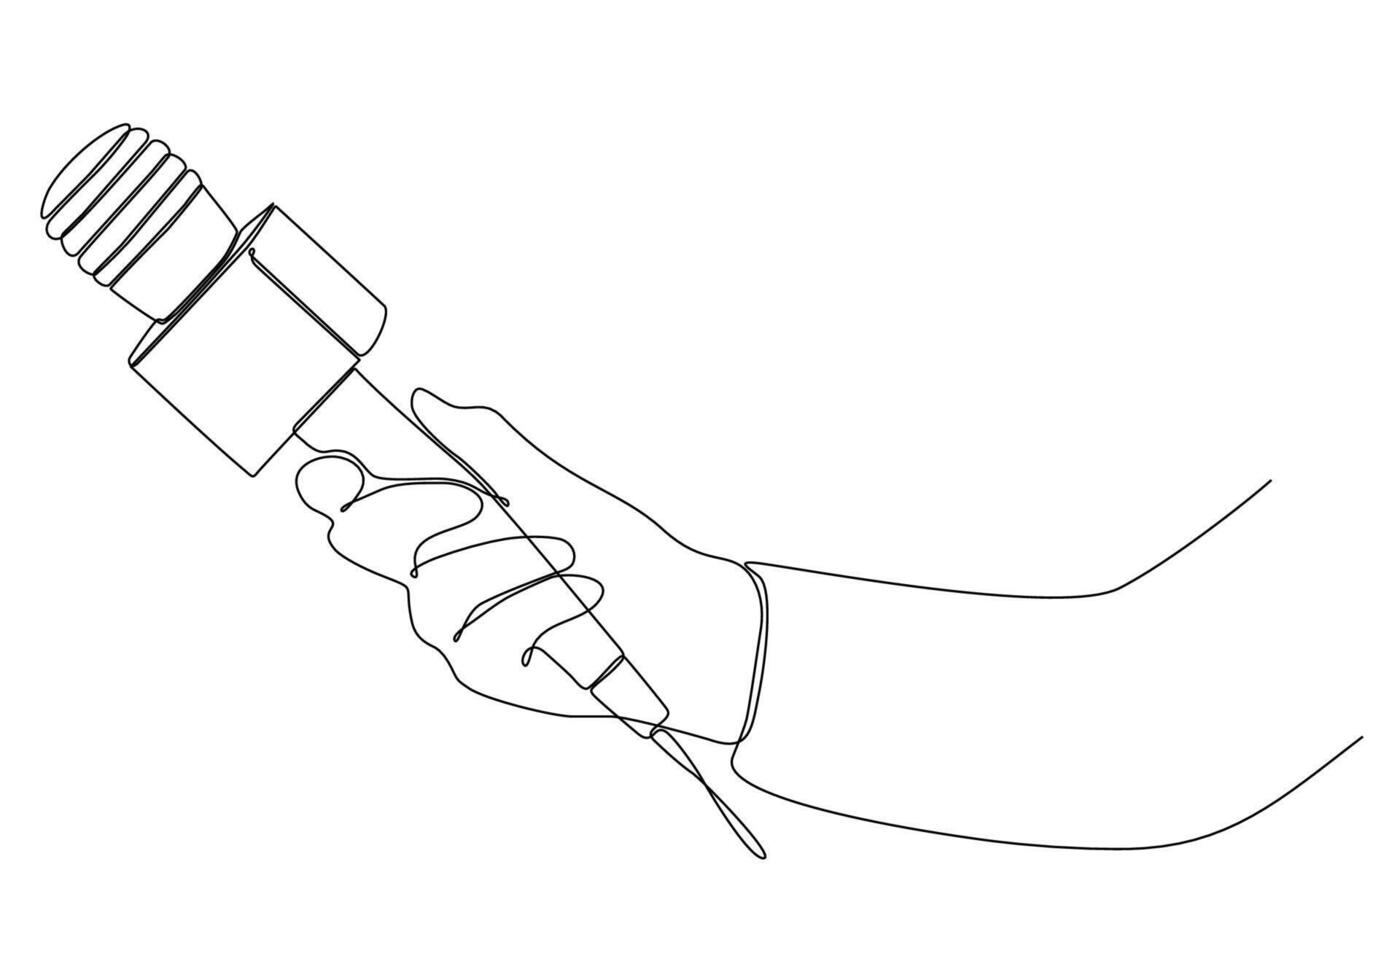 kontinuerlig linje bild håller mikrofon, journalist symbol vektor illustration